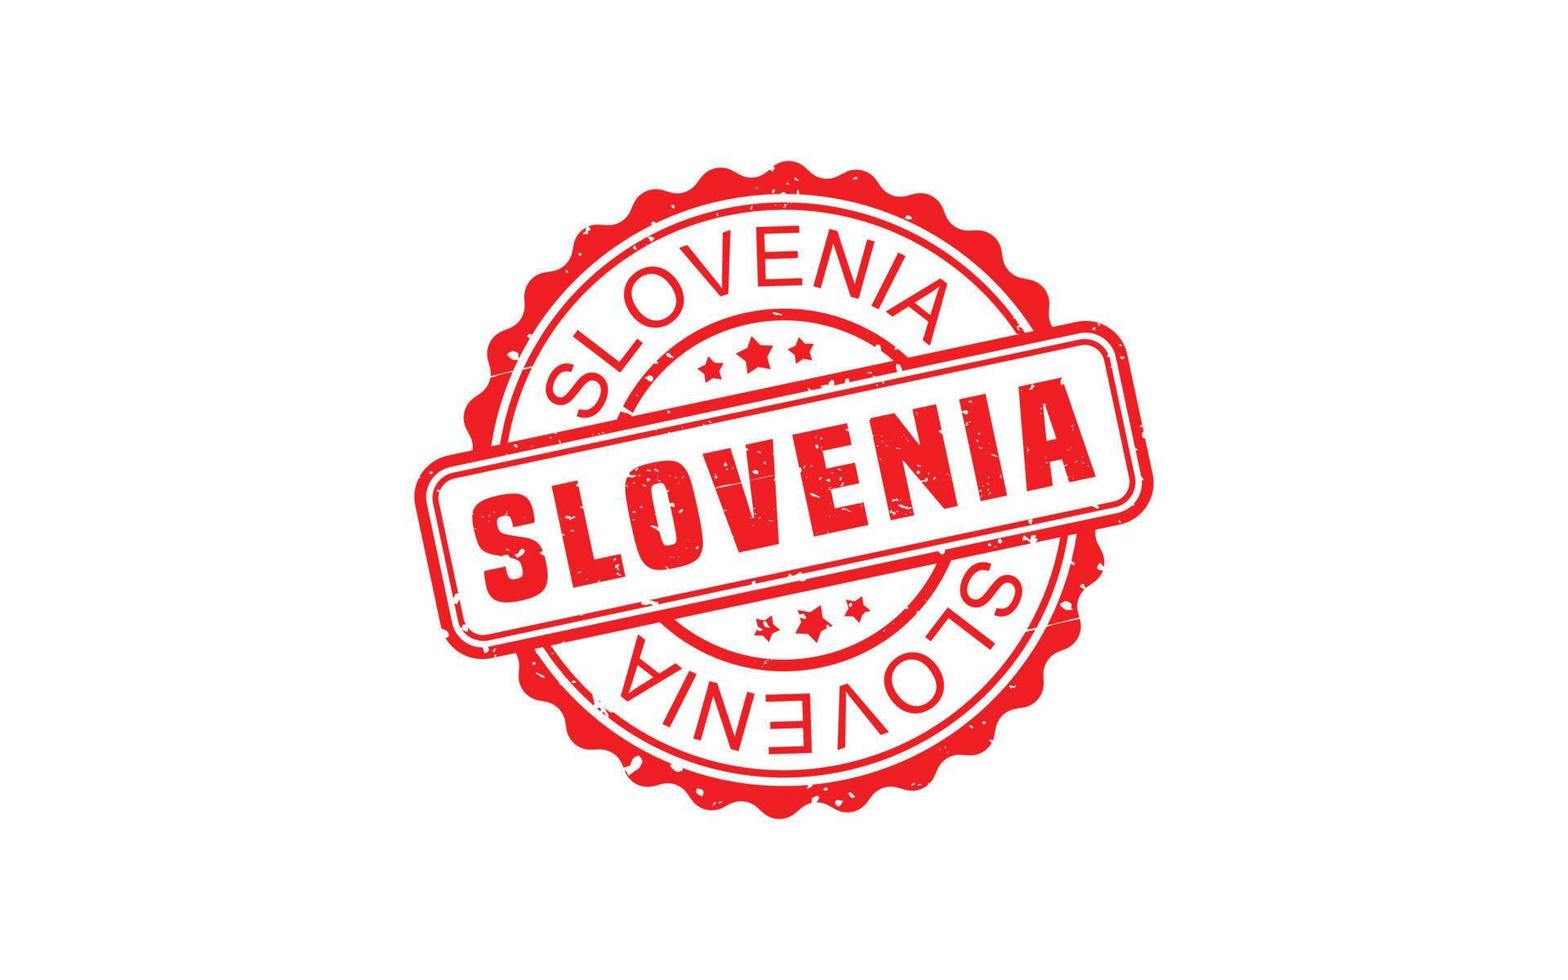 slovenien stämpel sudd med grunge stil på vit bakgrund vektor